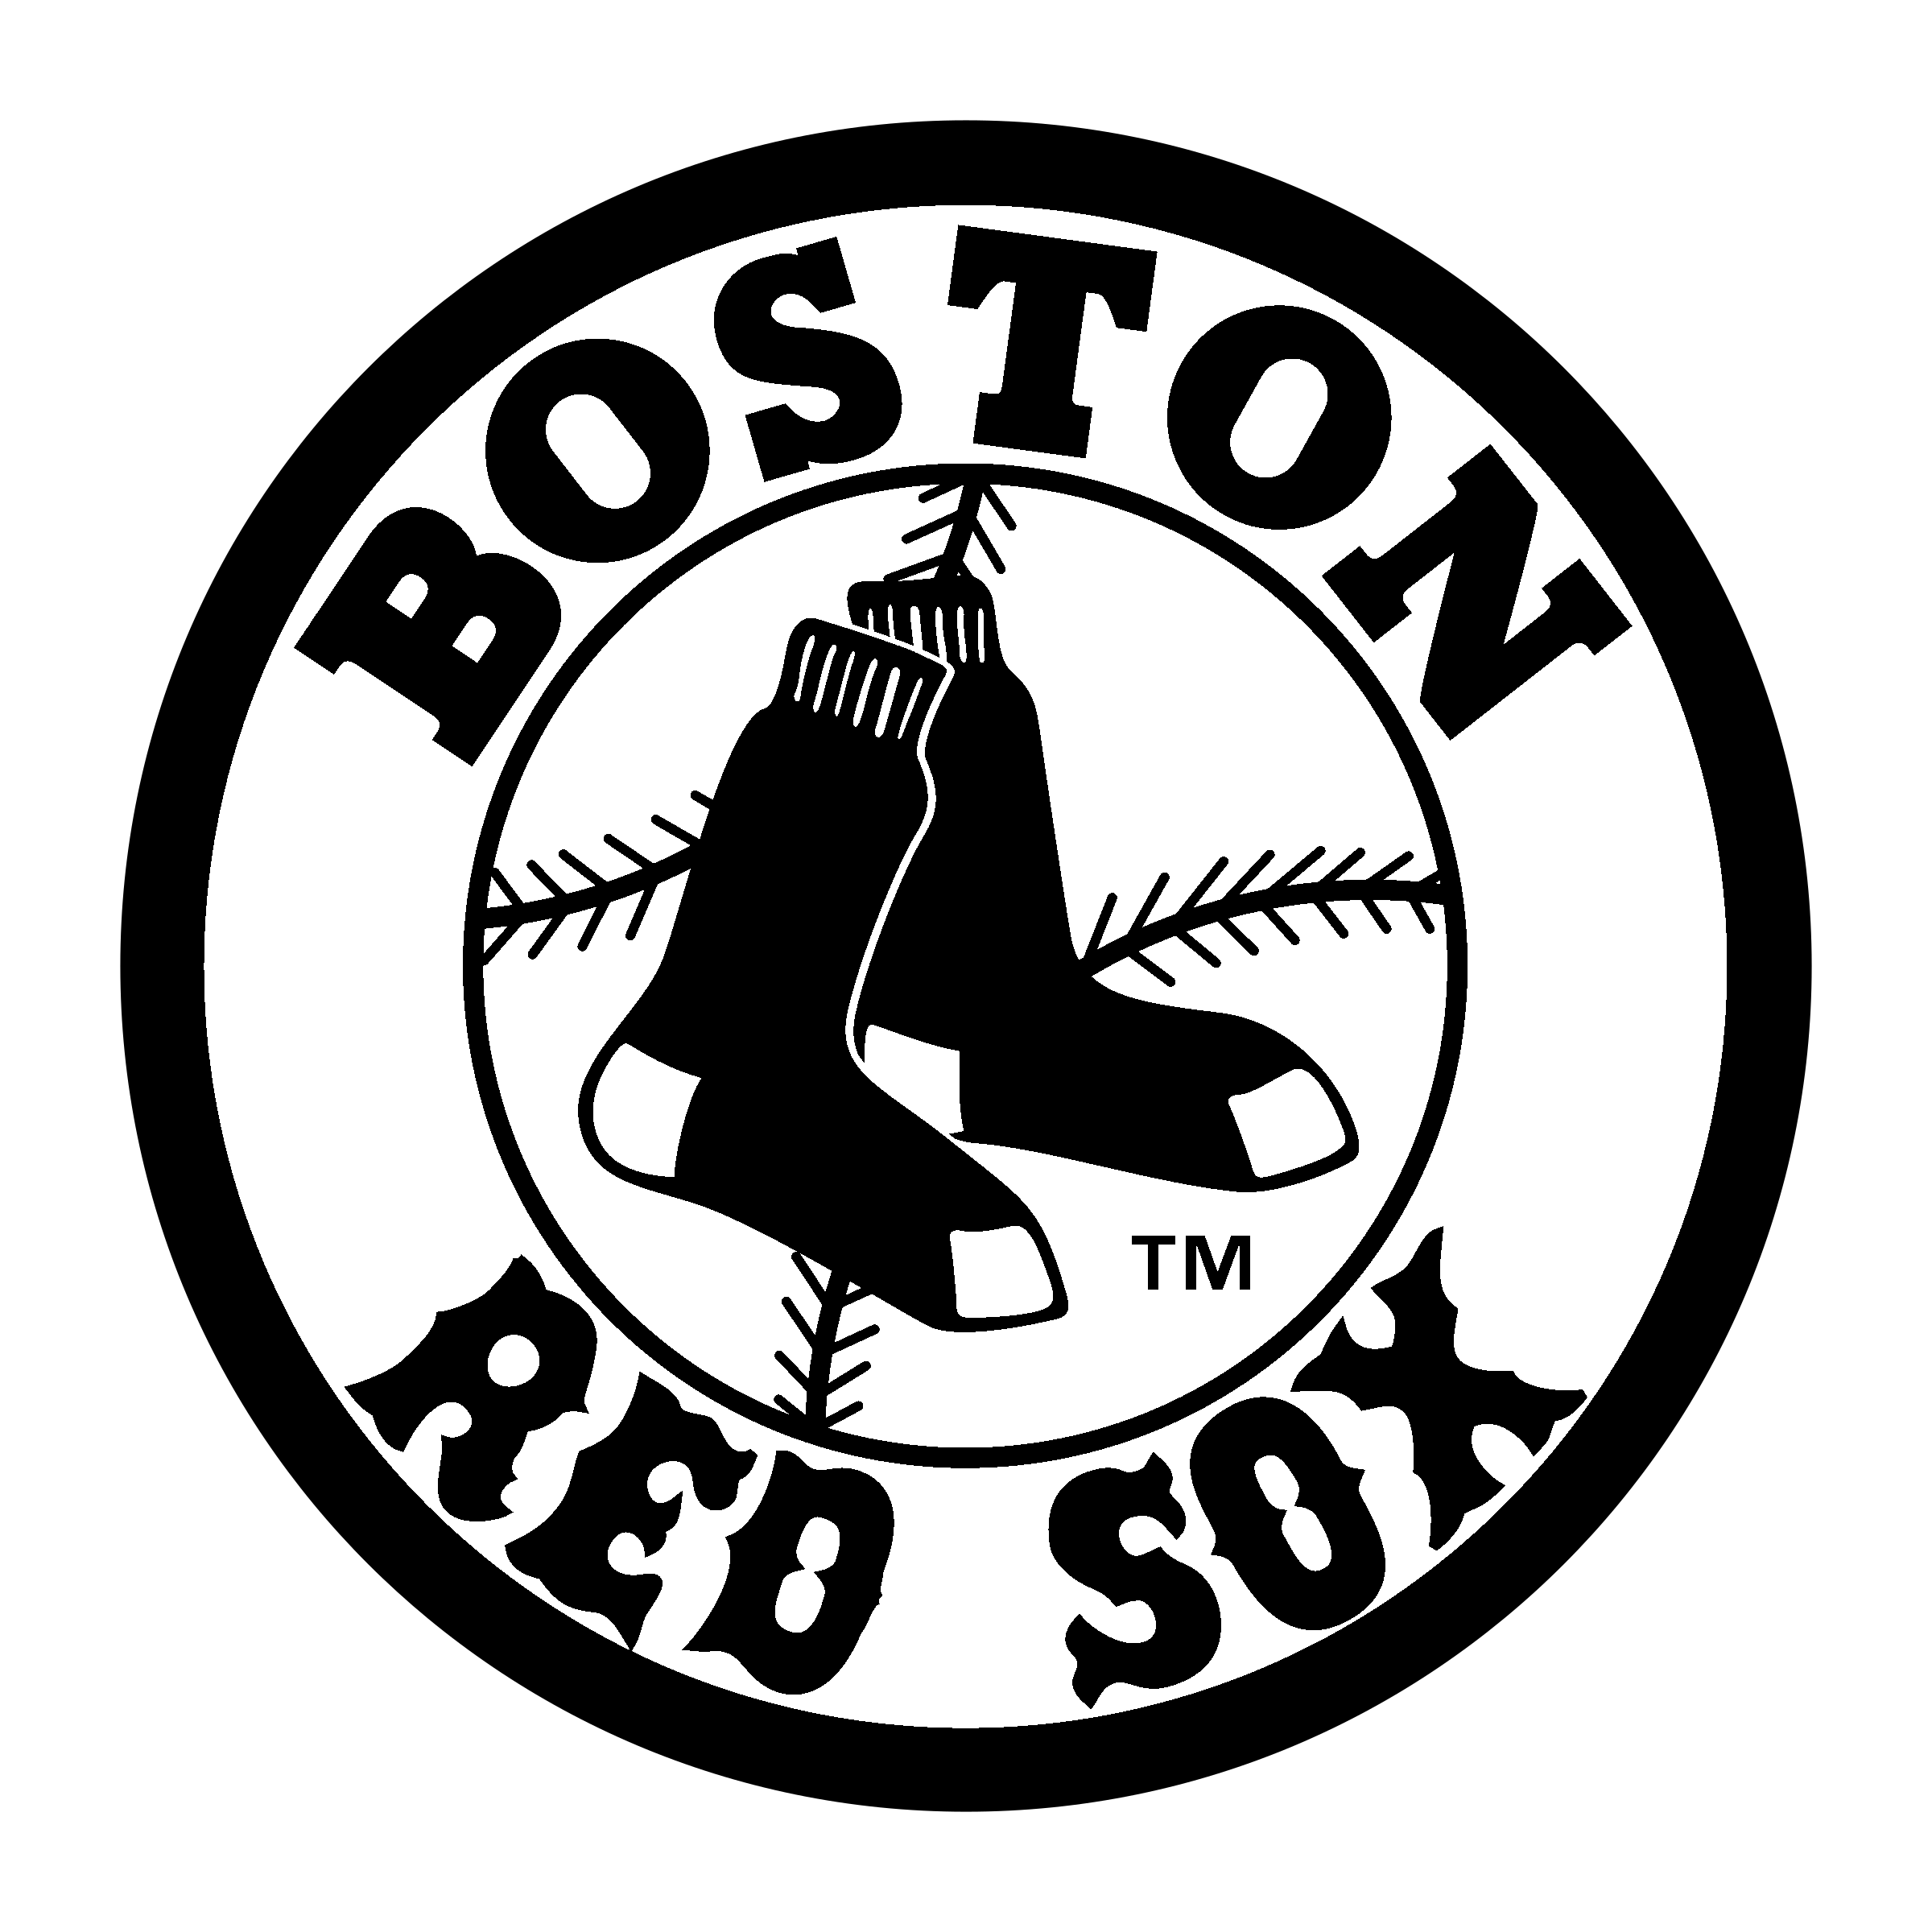 Boston Red Sox Logo MLB Emblem - boston university logo png download ...